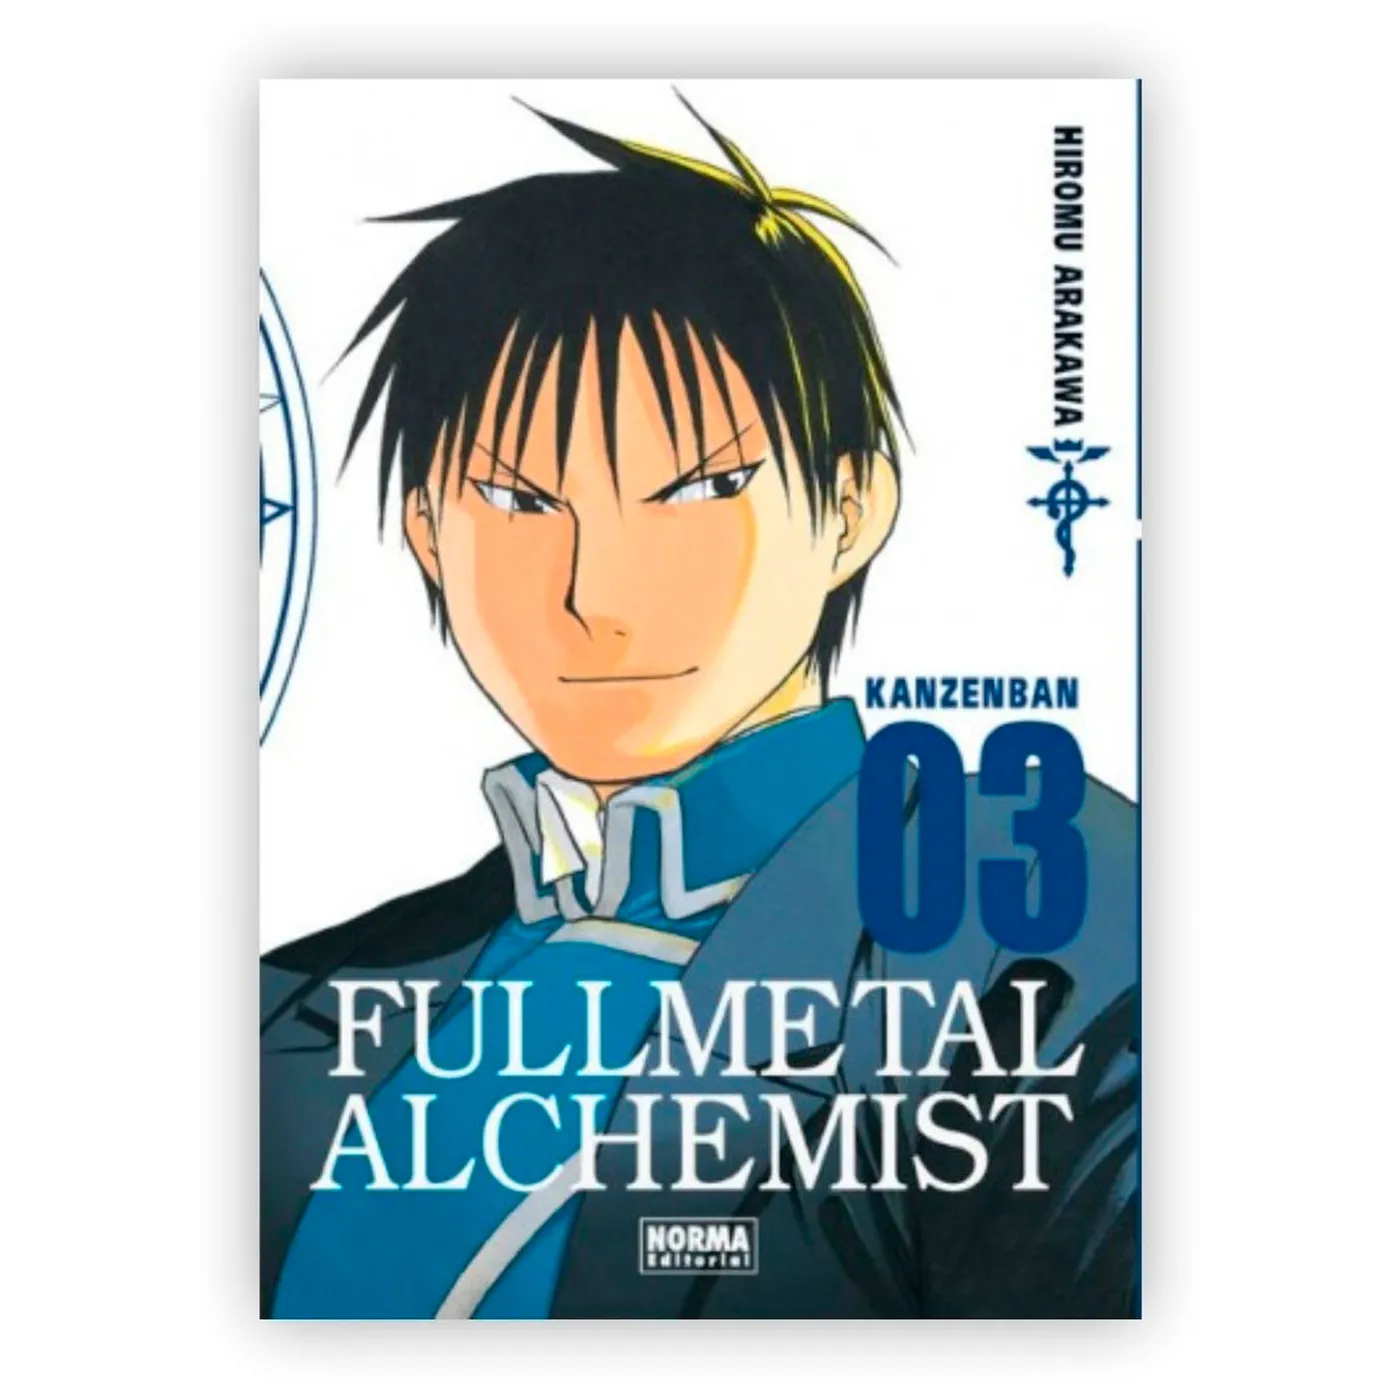 Fullmetal Alchemist Kanzenban No. 3